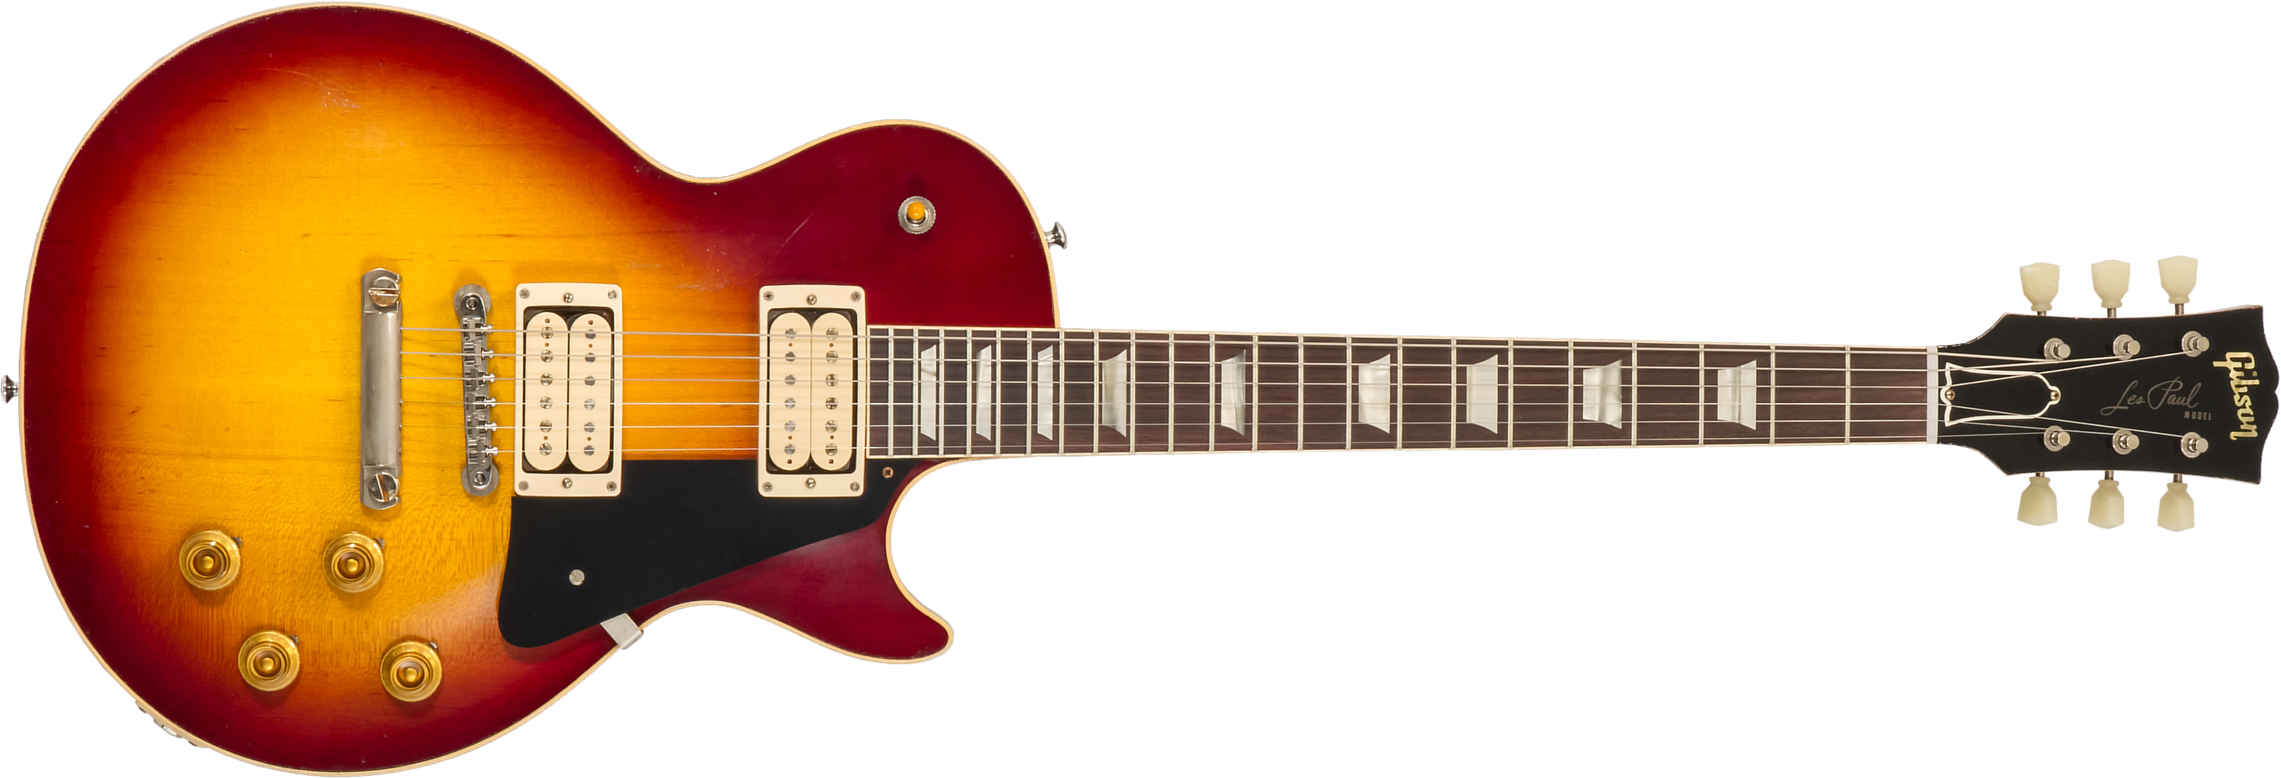 Gibson Custom Shop Jeff Beck Les Paul Standard 1959 Yardburst 2h Ht Rw #yb010 - Murphy Lab Aged Dark Cherry Sunburst - Guitare Électrique Single Cut -